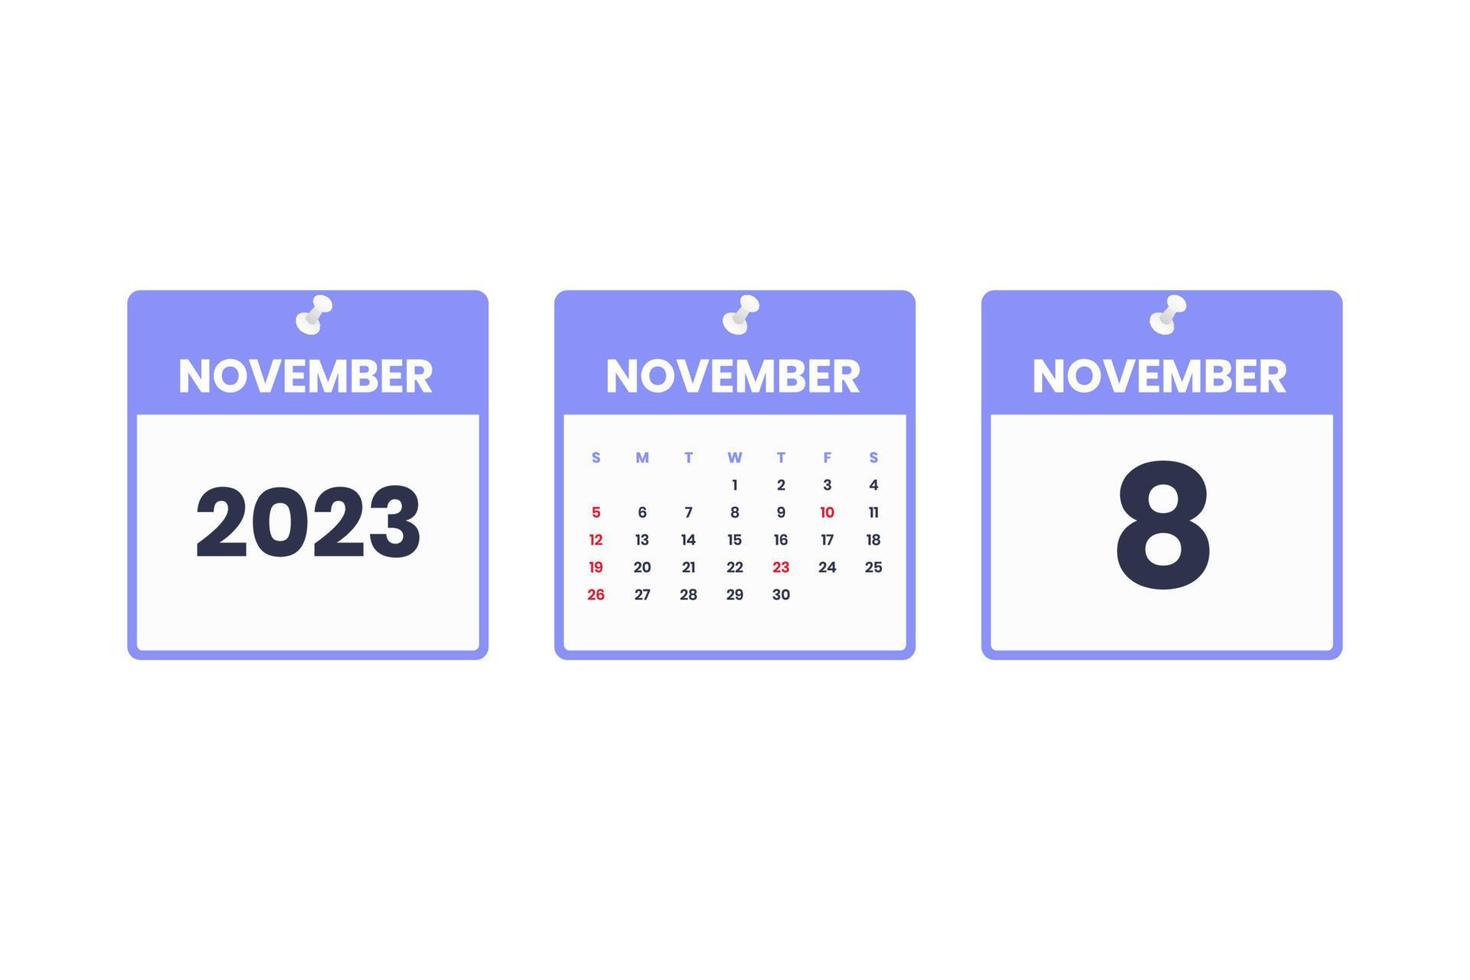 November calendar design. November 8 2023 calendar icon for schedule, appointment, important date concept vector